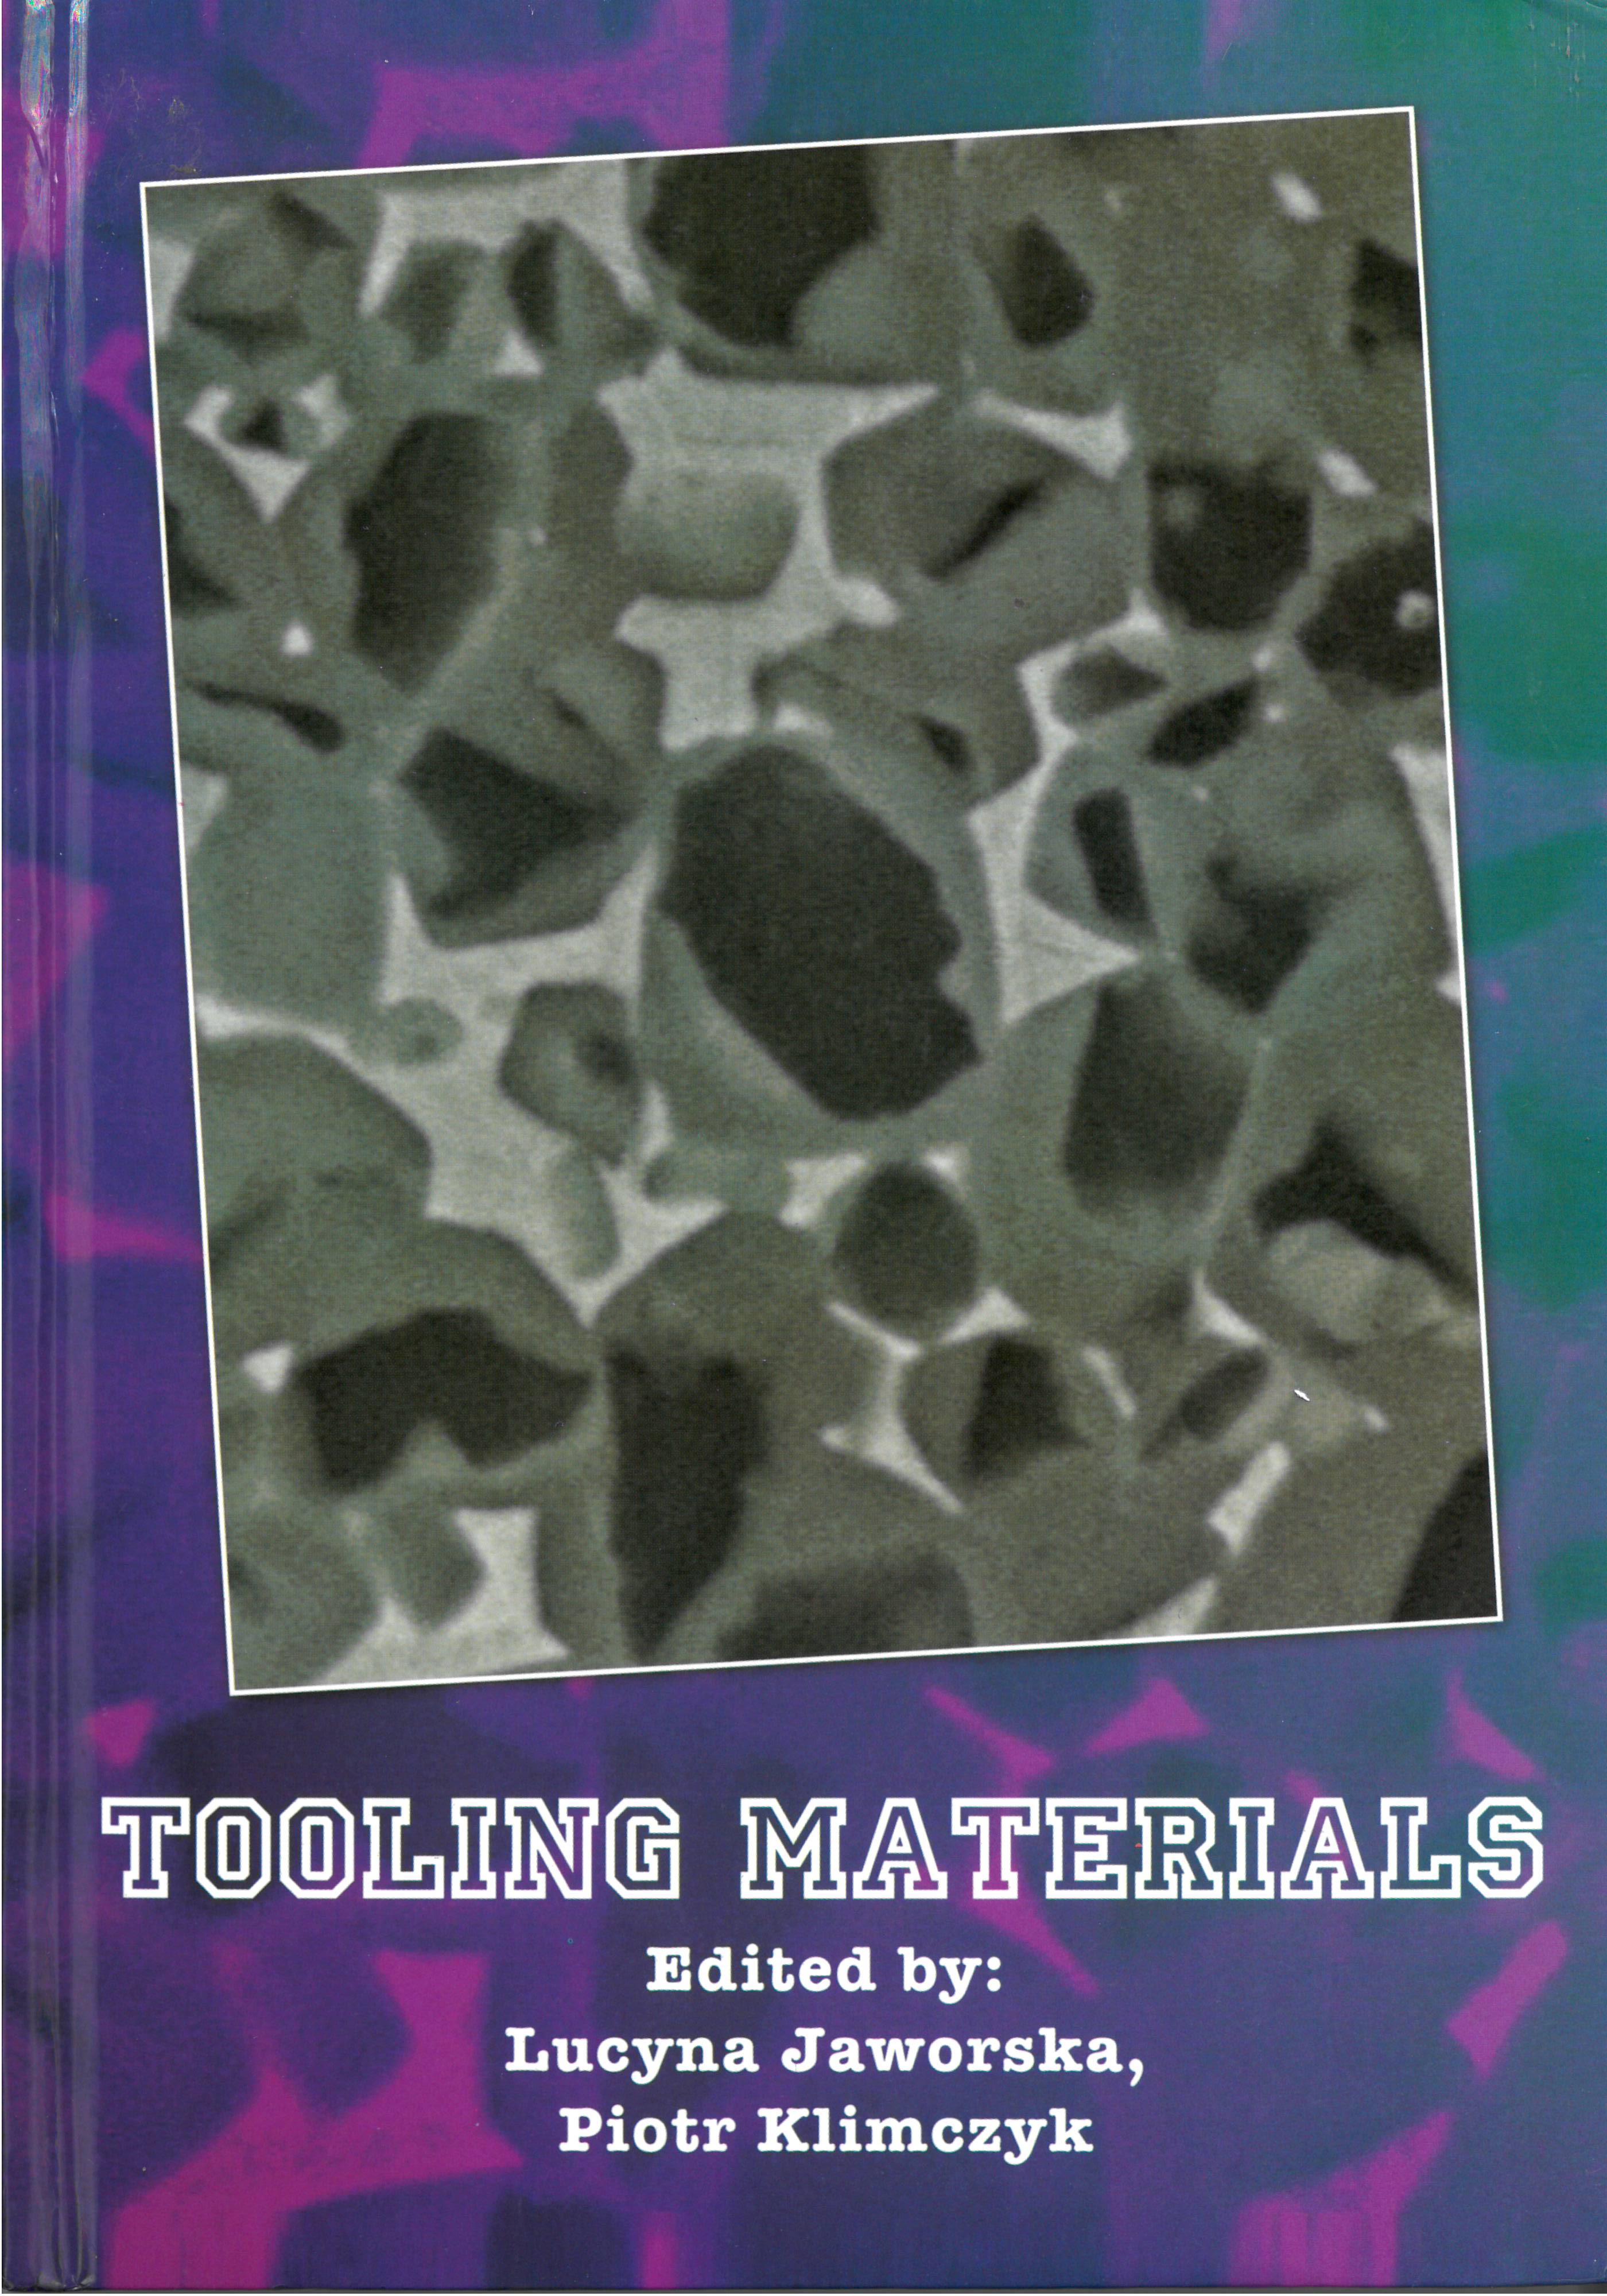 Tooling Materials